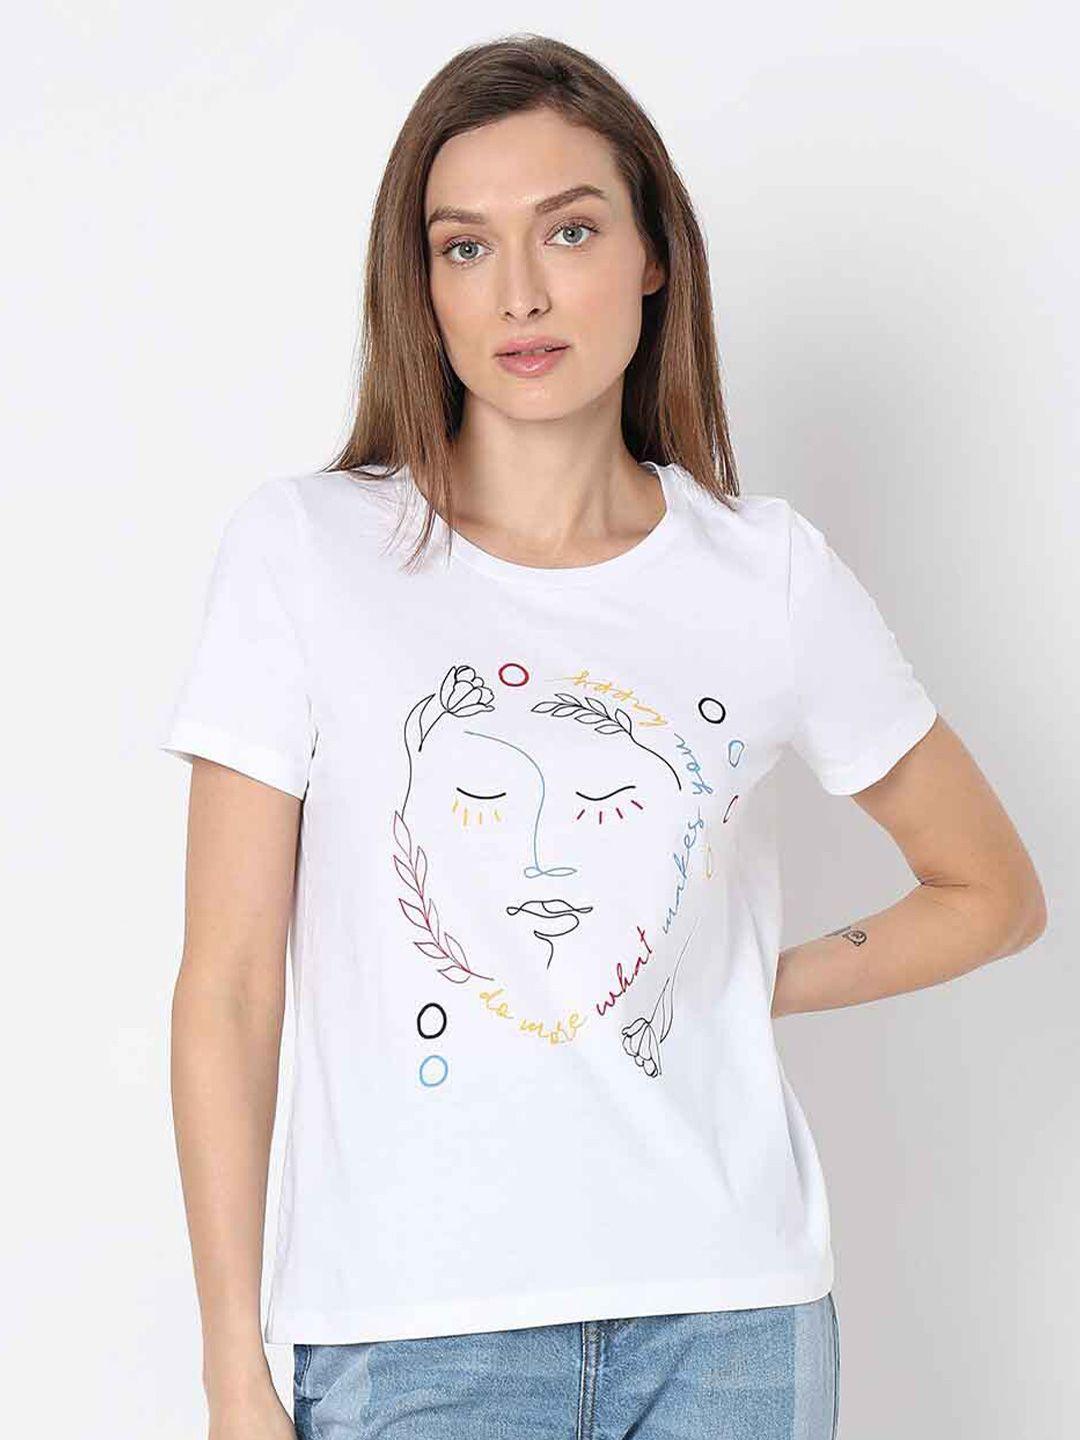 vero moda graphic printed round neck pure cotton t-shirt